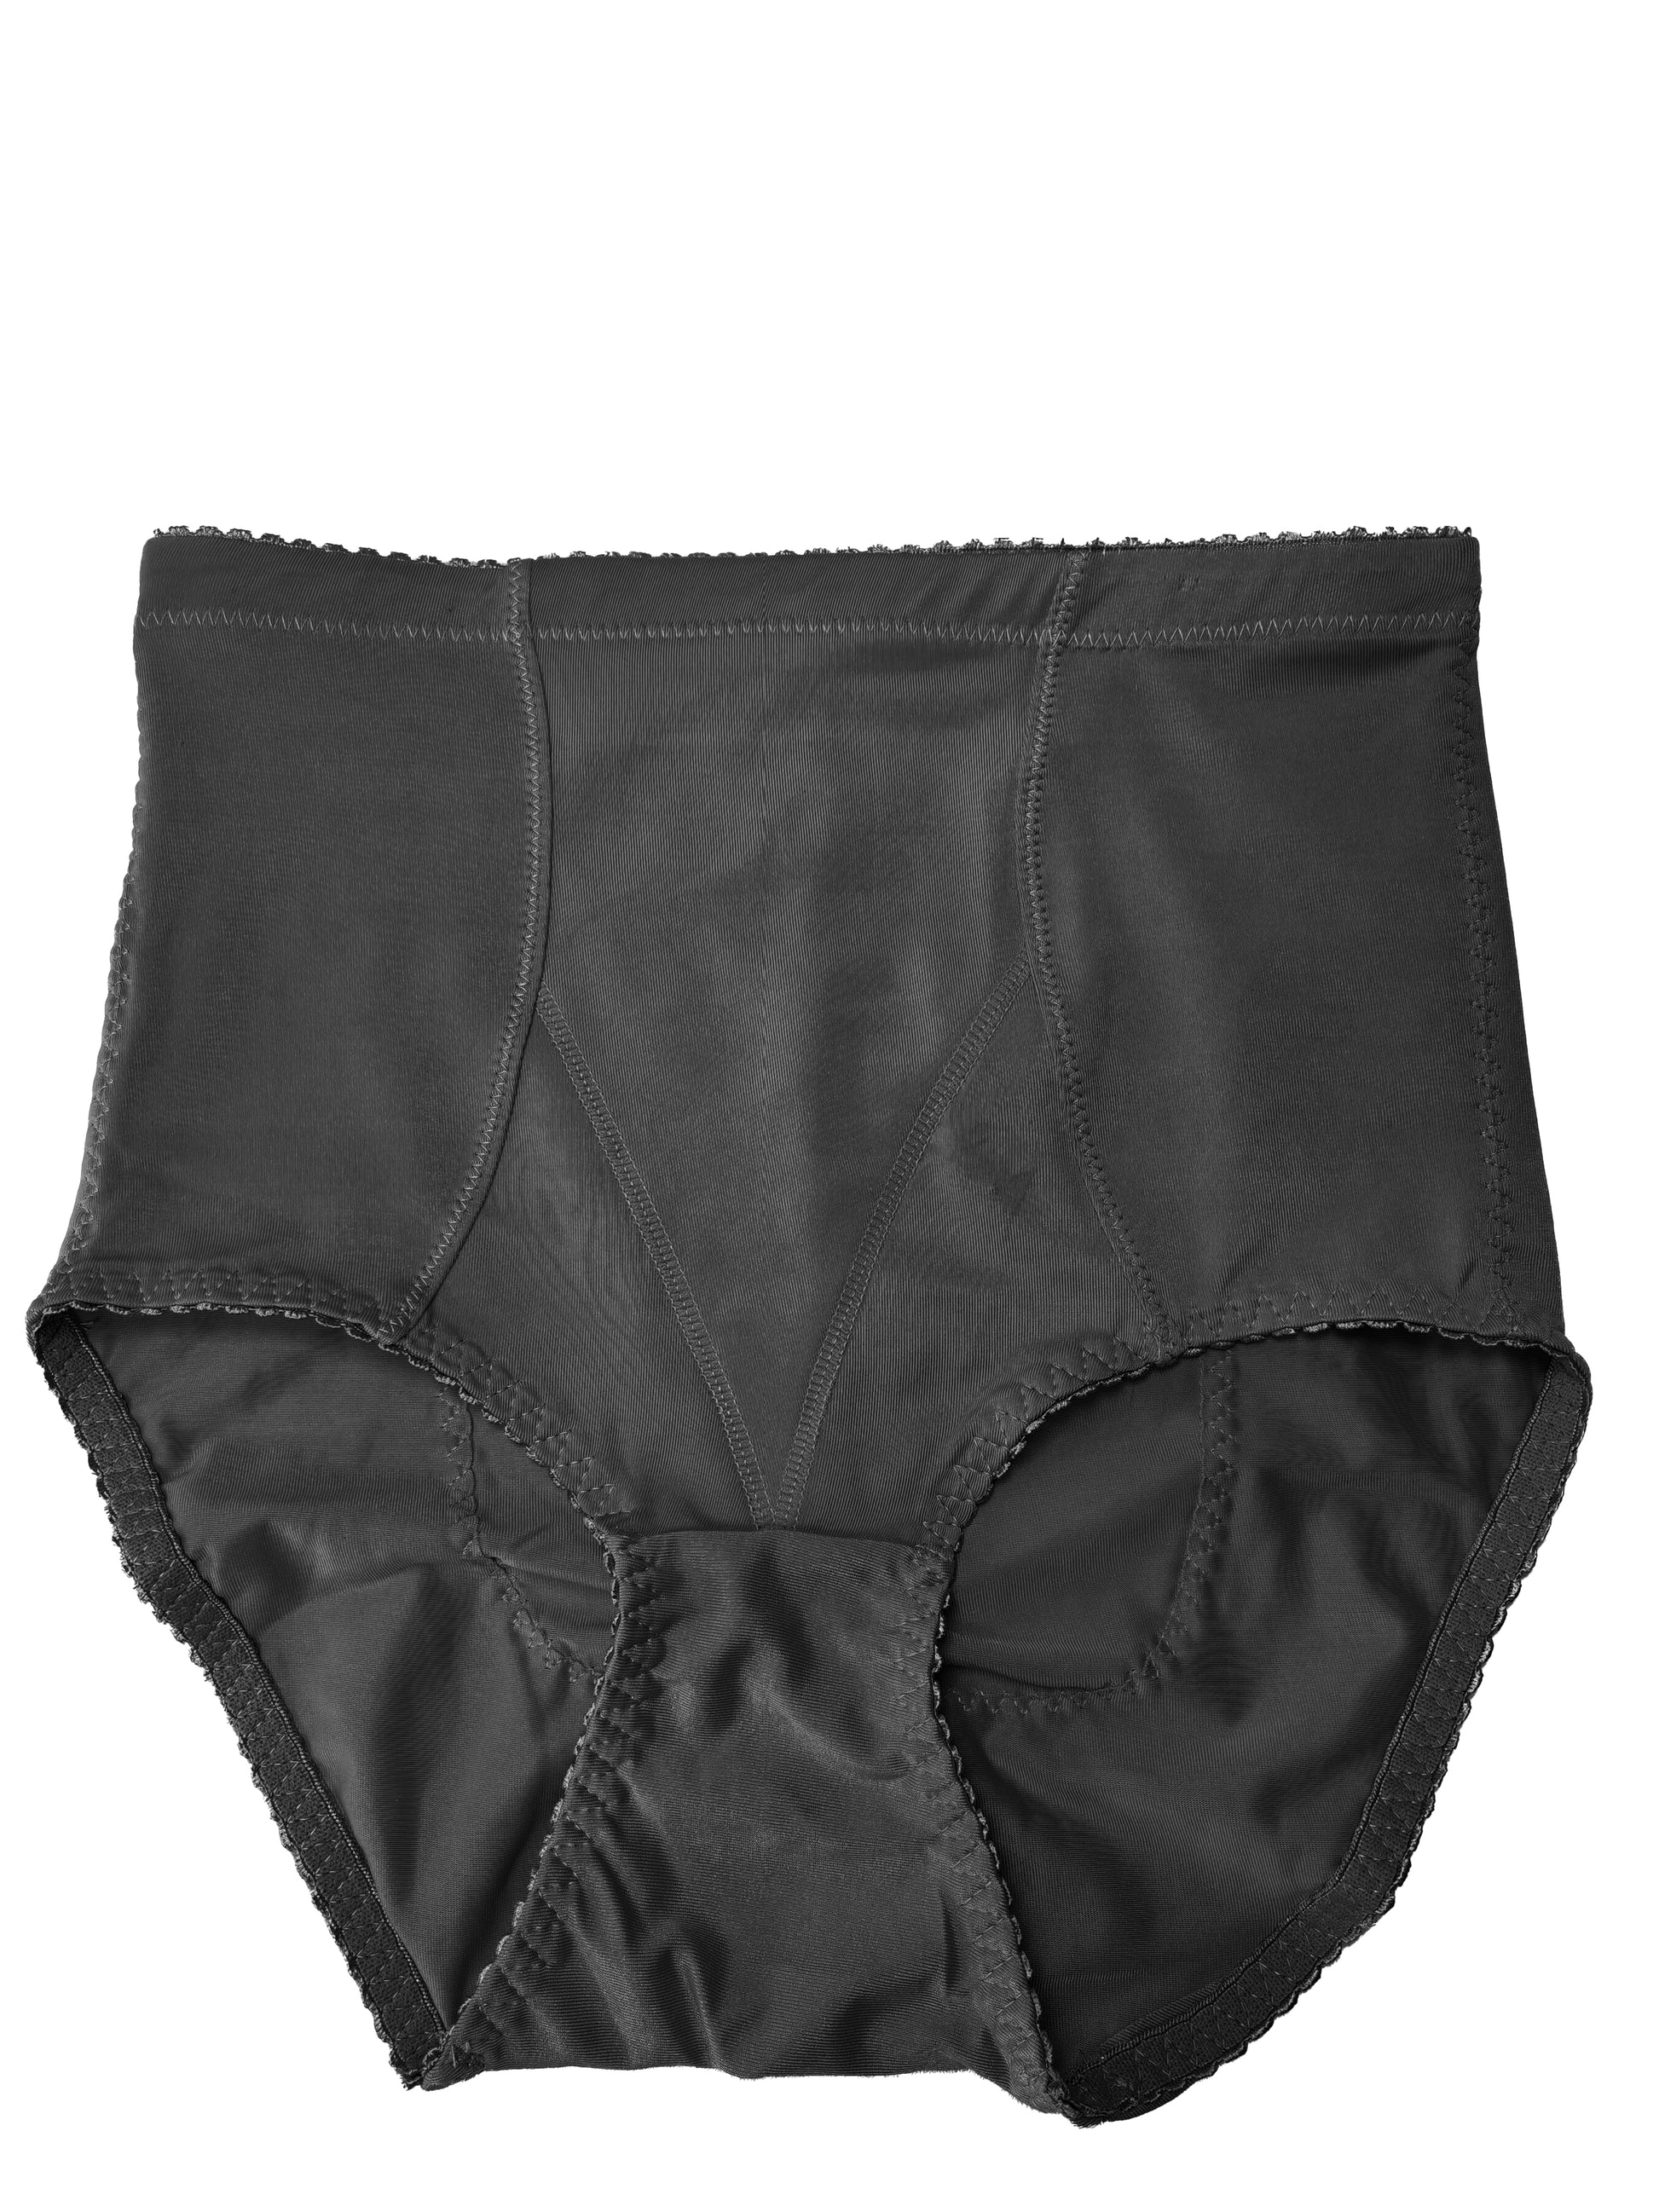 Women's Knickers Butt Lift Tummy Light Control Girdle Panty